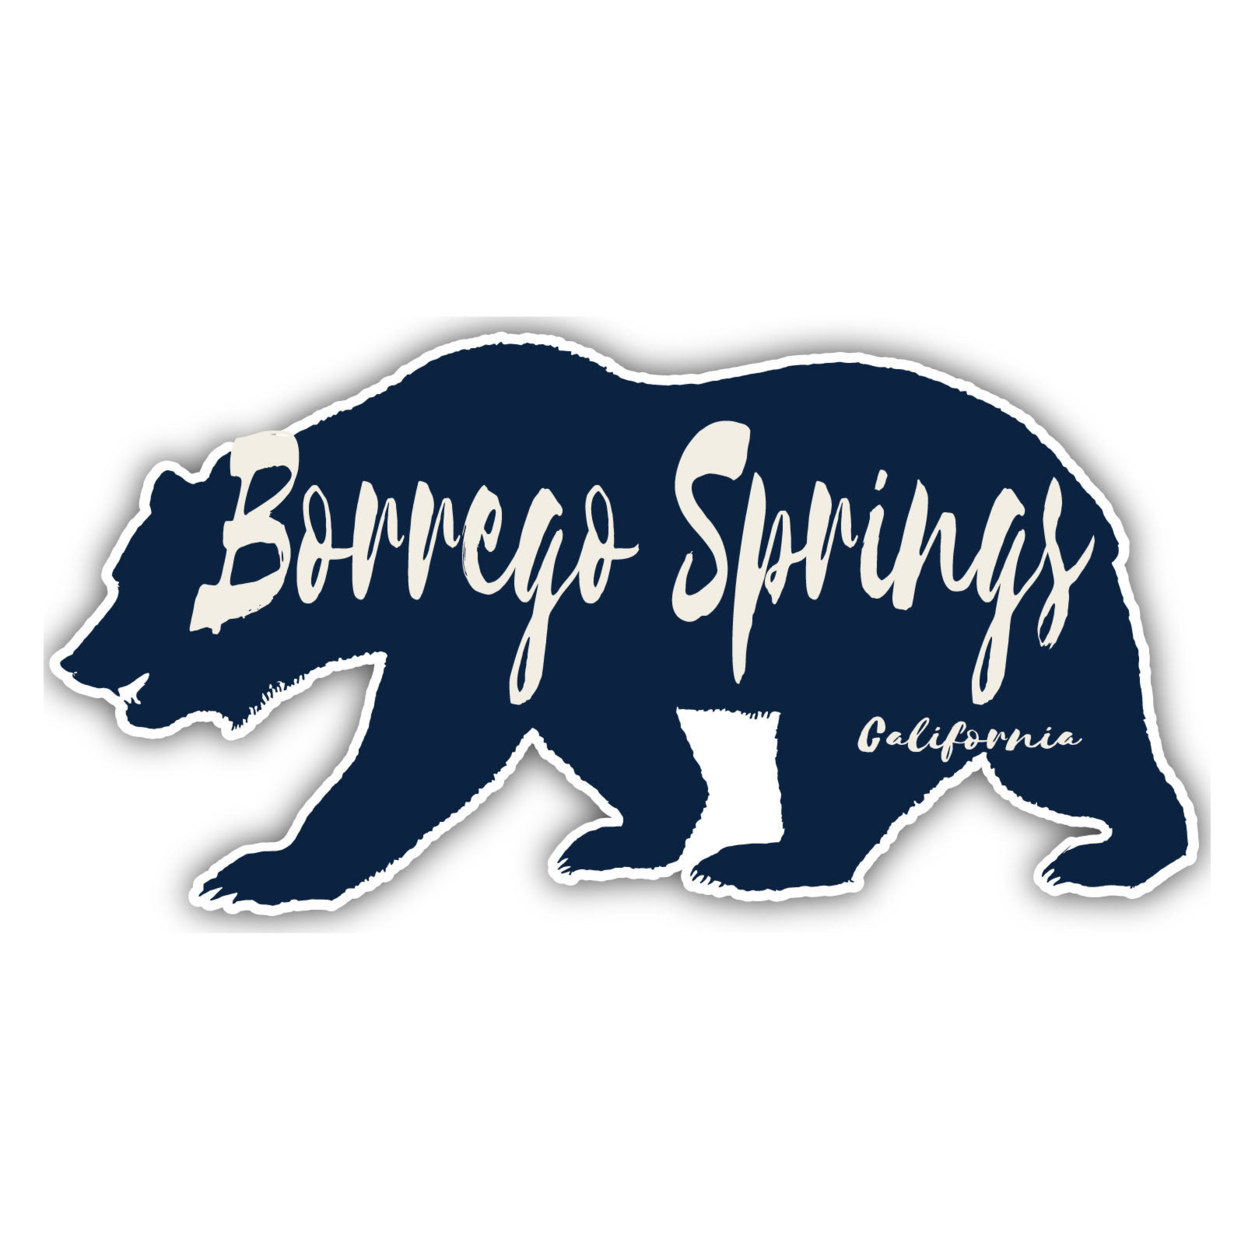 Borrego Springs California Souvenir Decorative Stickers (Choose Theme And Size) - Single Unit, 10-Inch, Bear